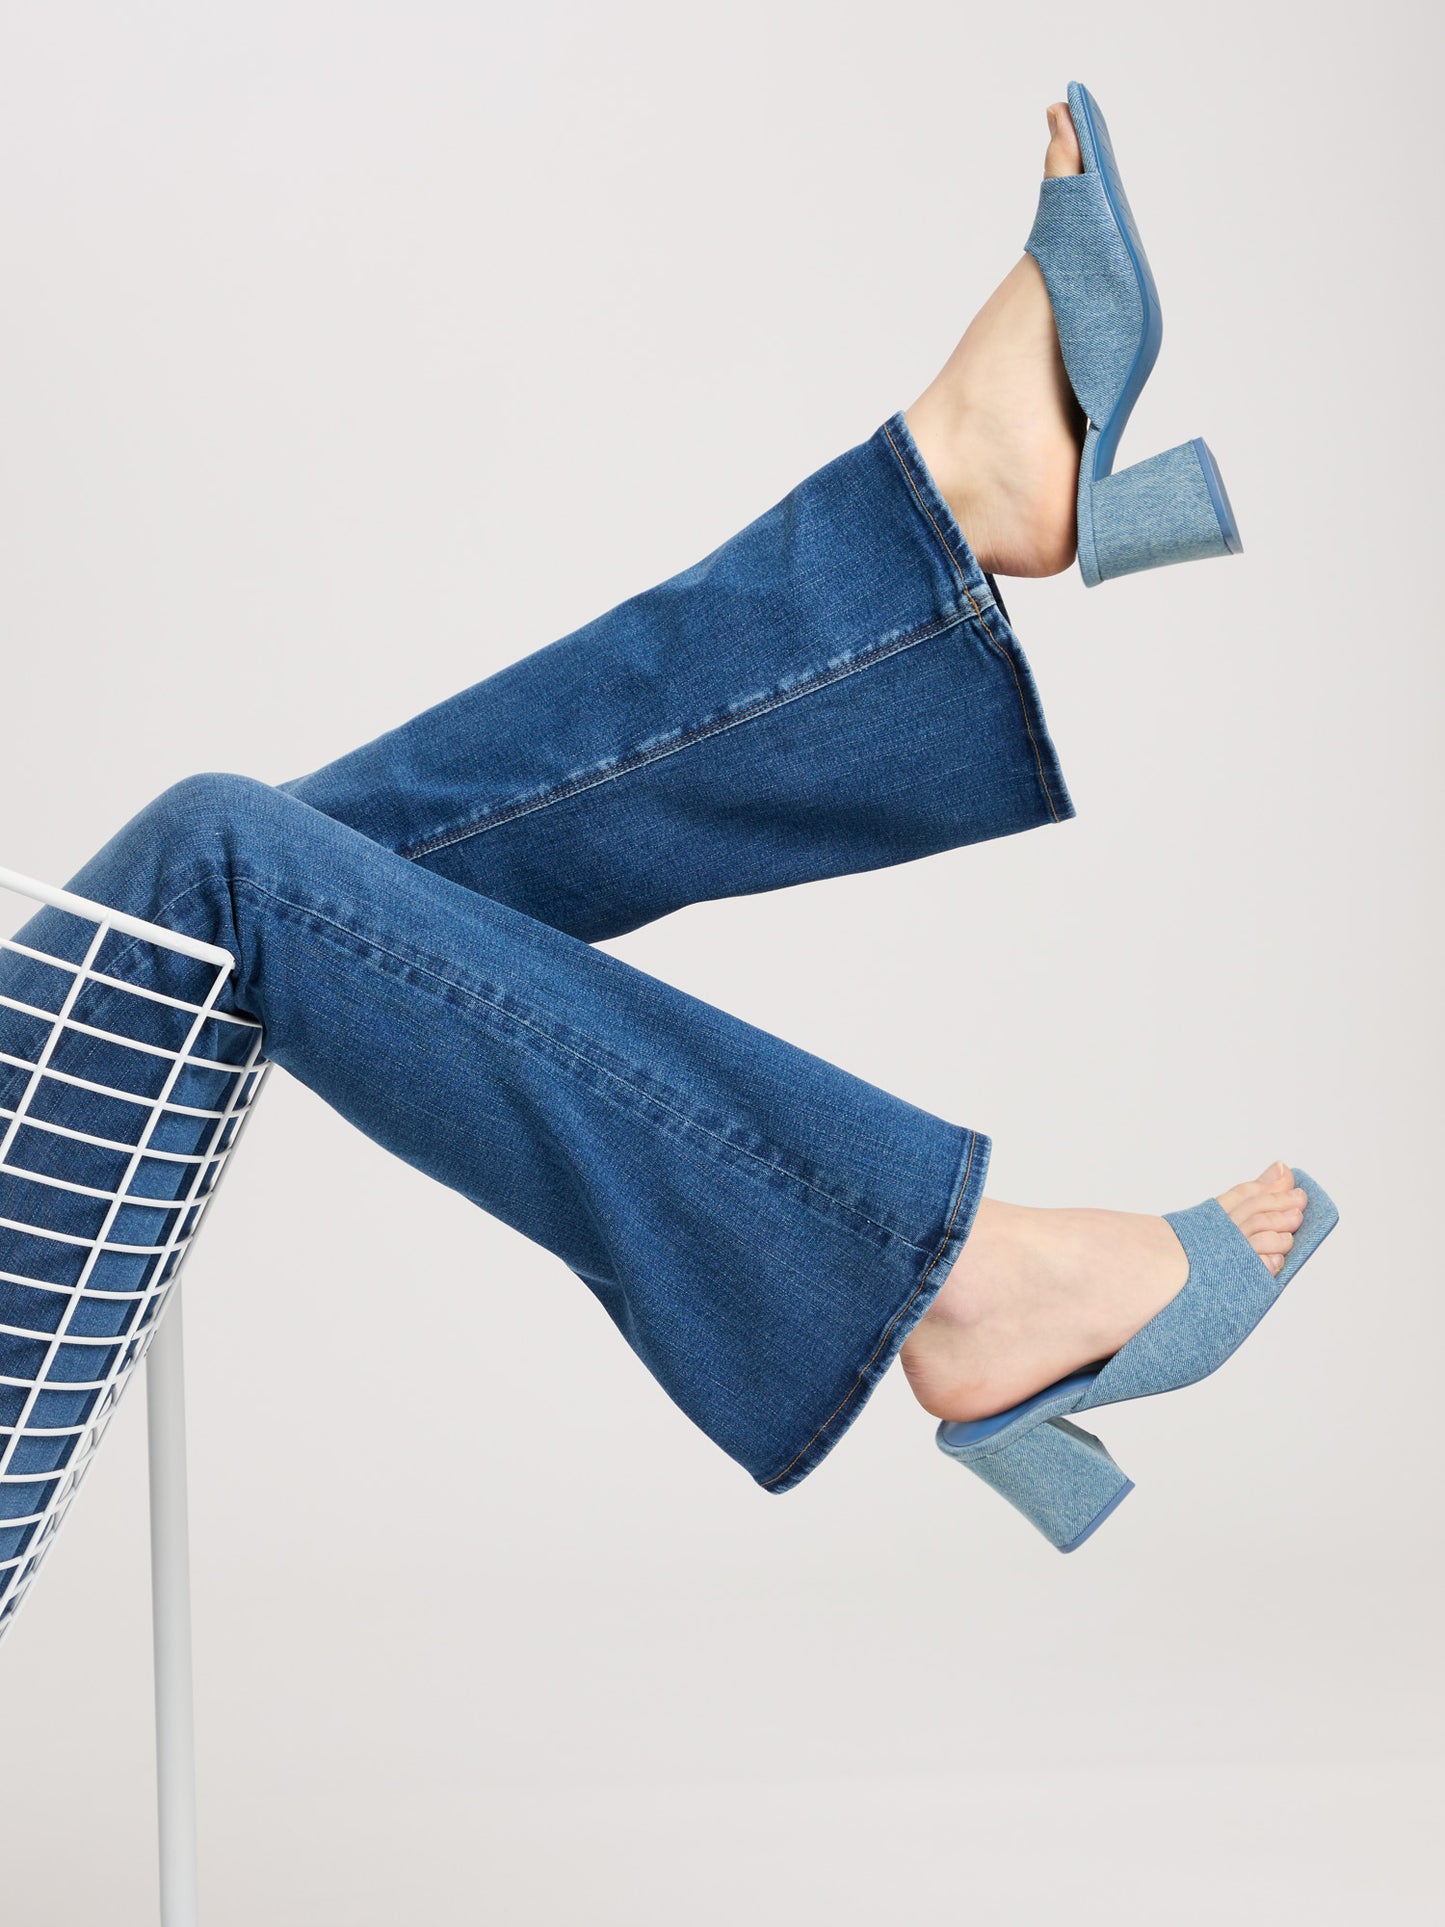 Faye women's jeans slim fit high waist flare leg medium blue